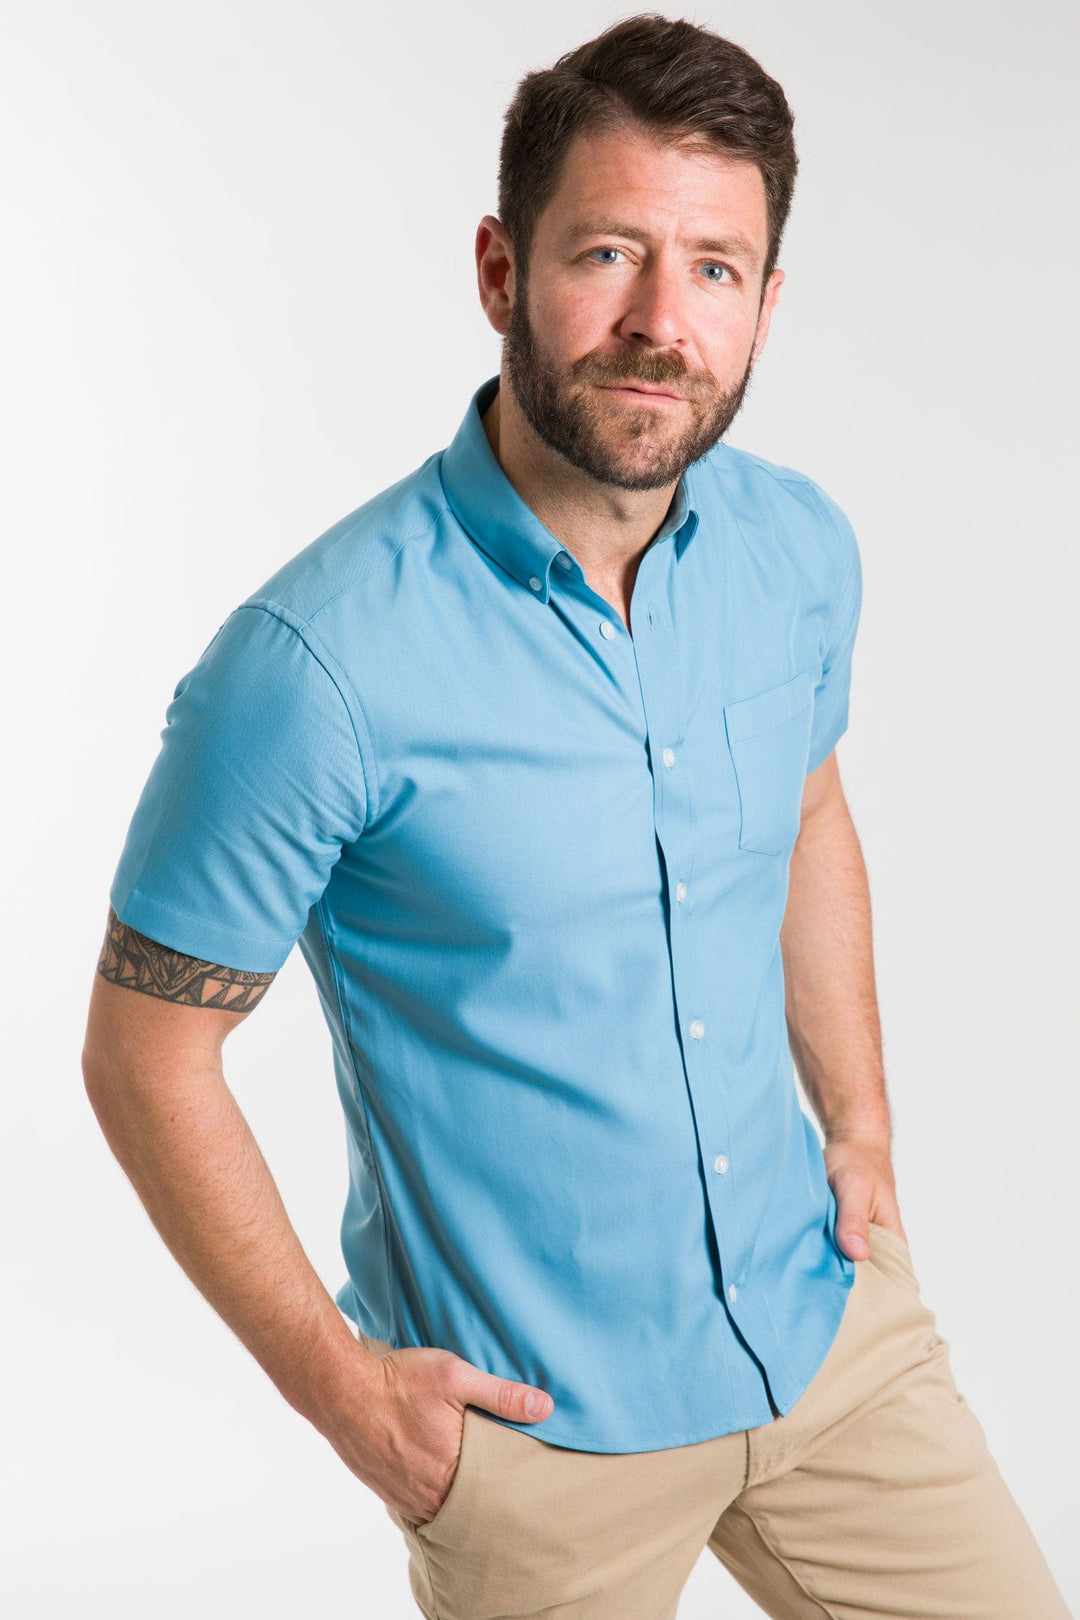 Buy Tropic Oceans Floral Plaid Short Sleeve Shirt for Short Men | Ash & Erie   Short Sleeve Everyday Shirts